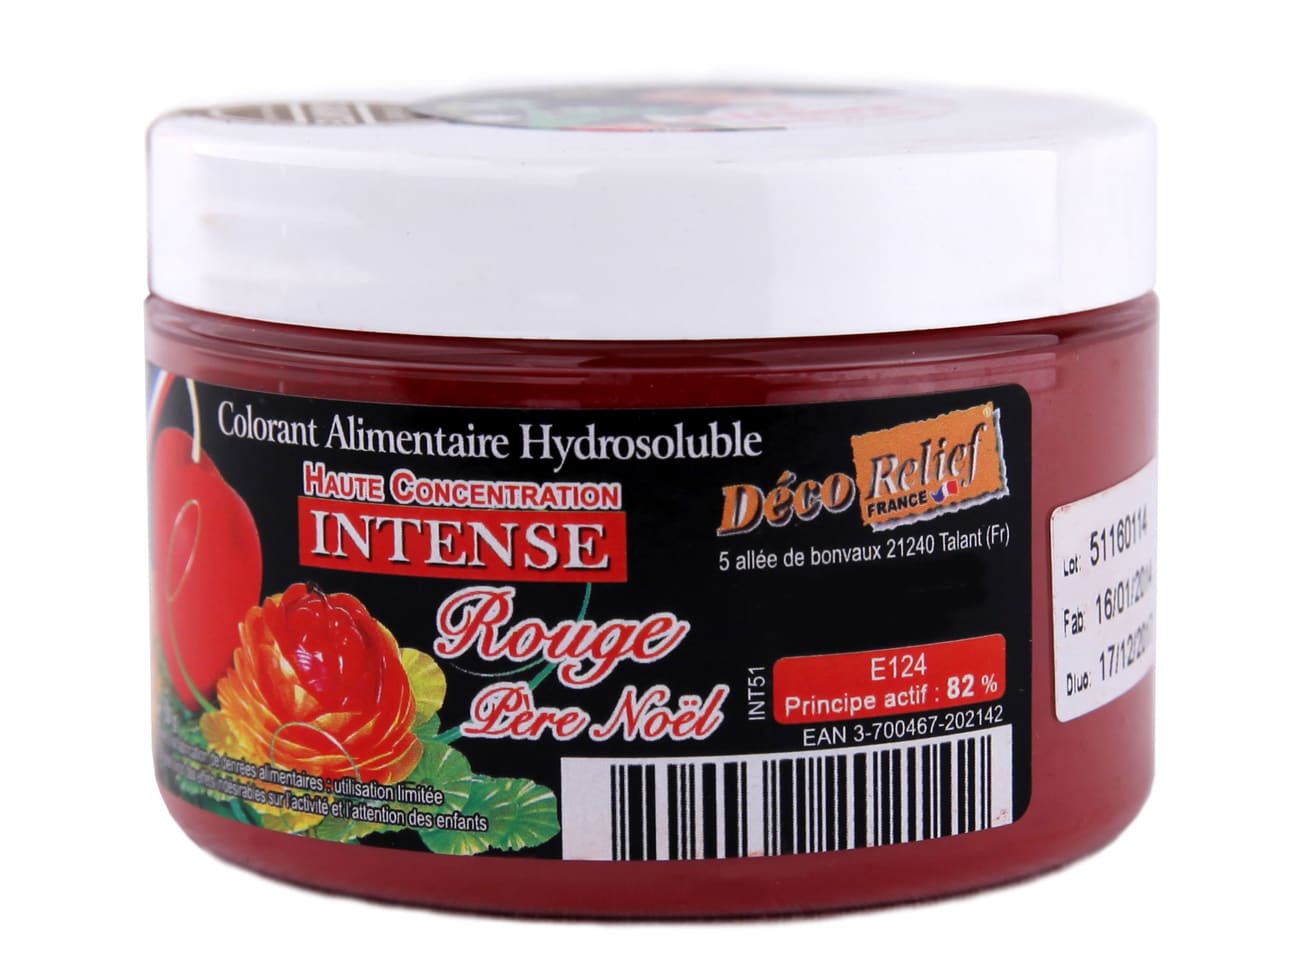 Colorante alimentare in gel - liposolubile - Rosa 100 g - Cake Décoration -  Meilleur du Chef